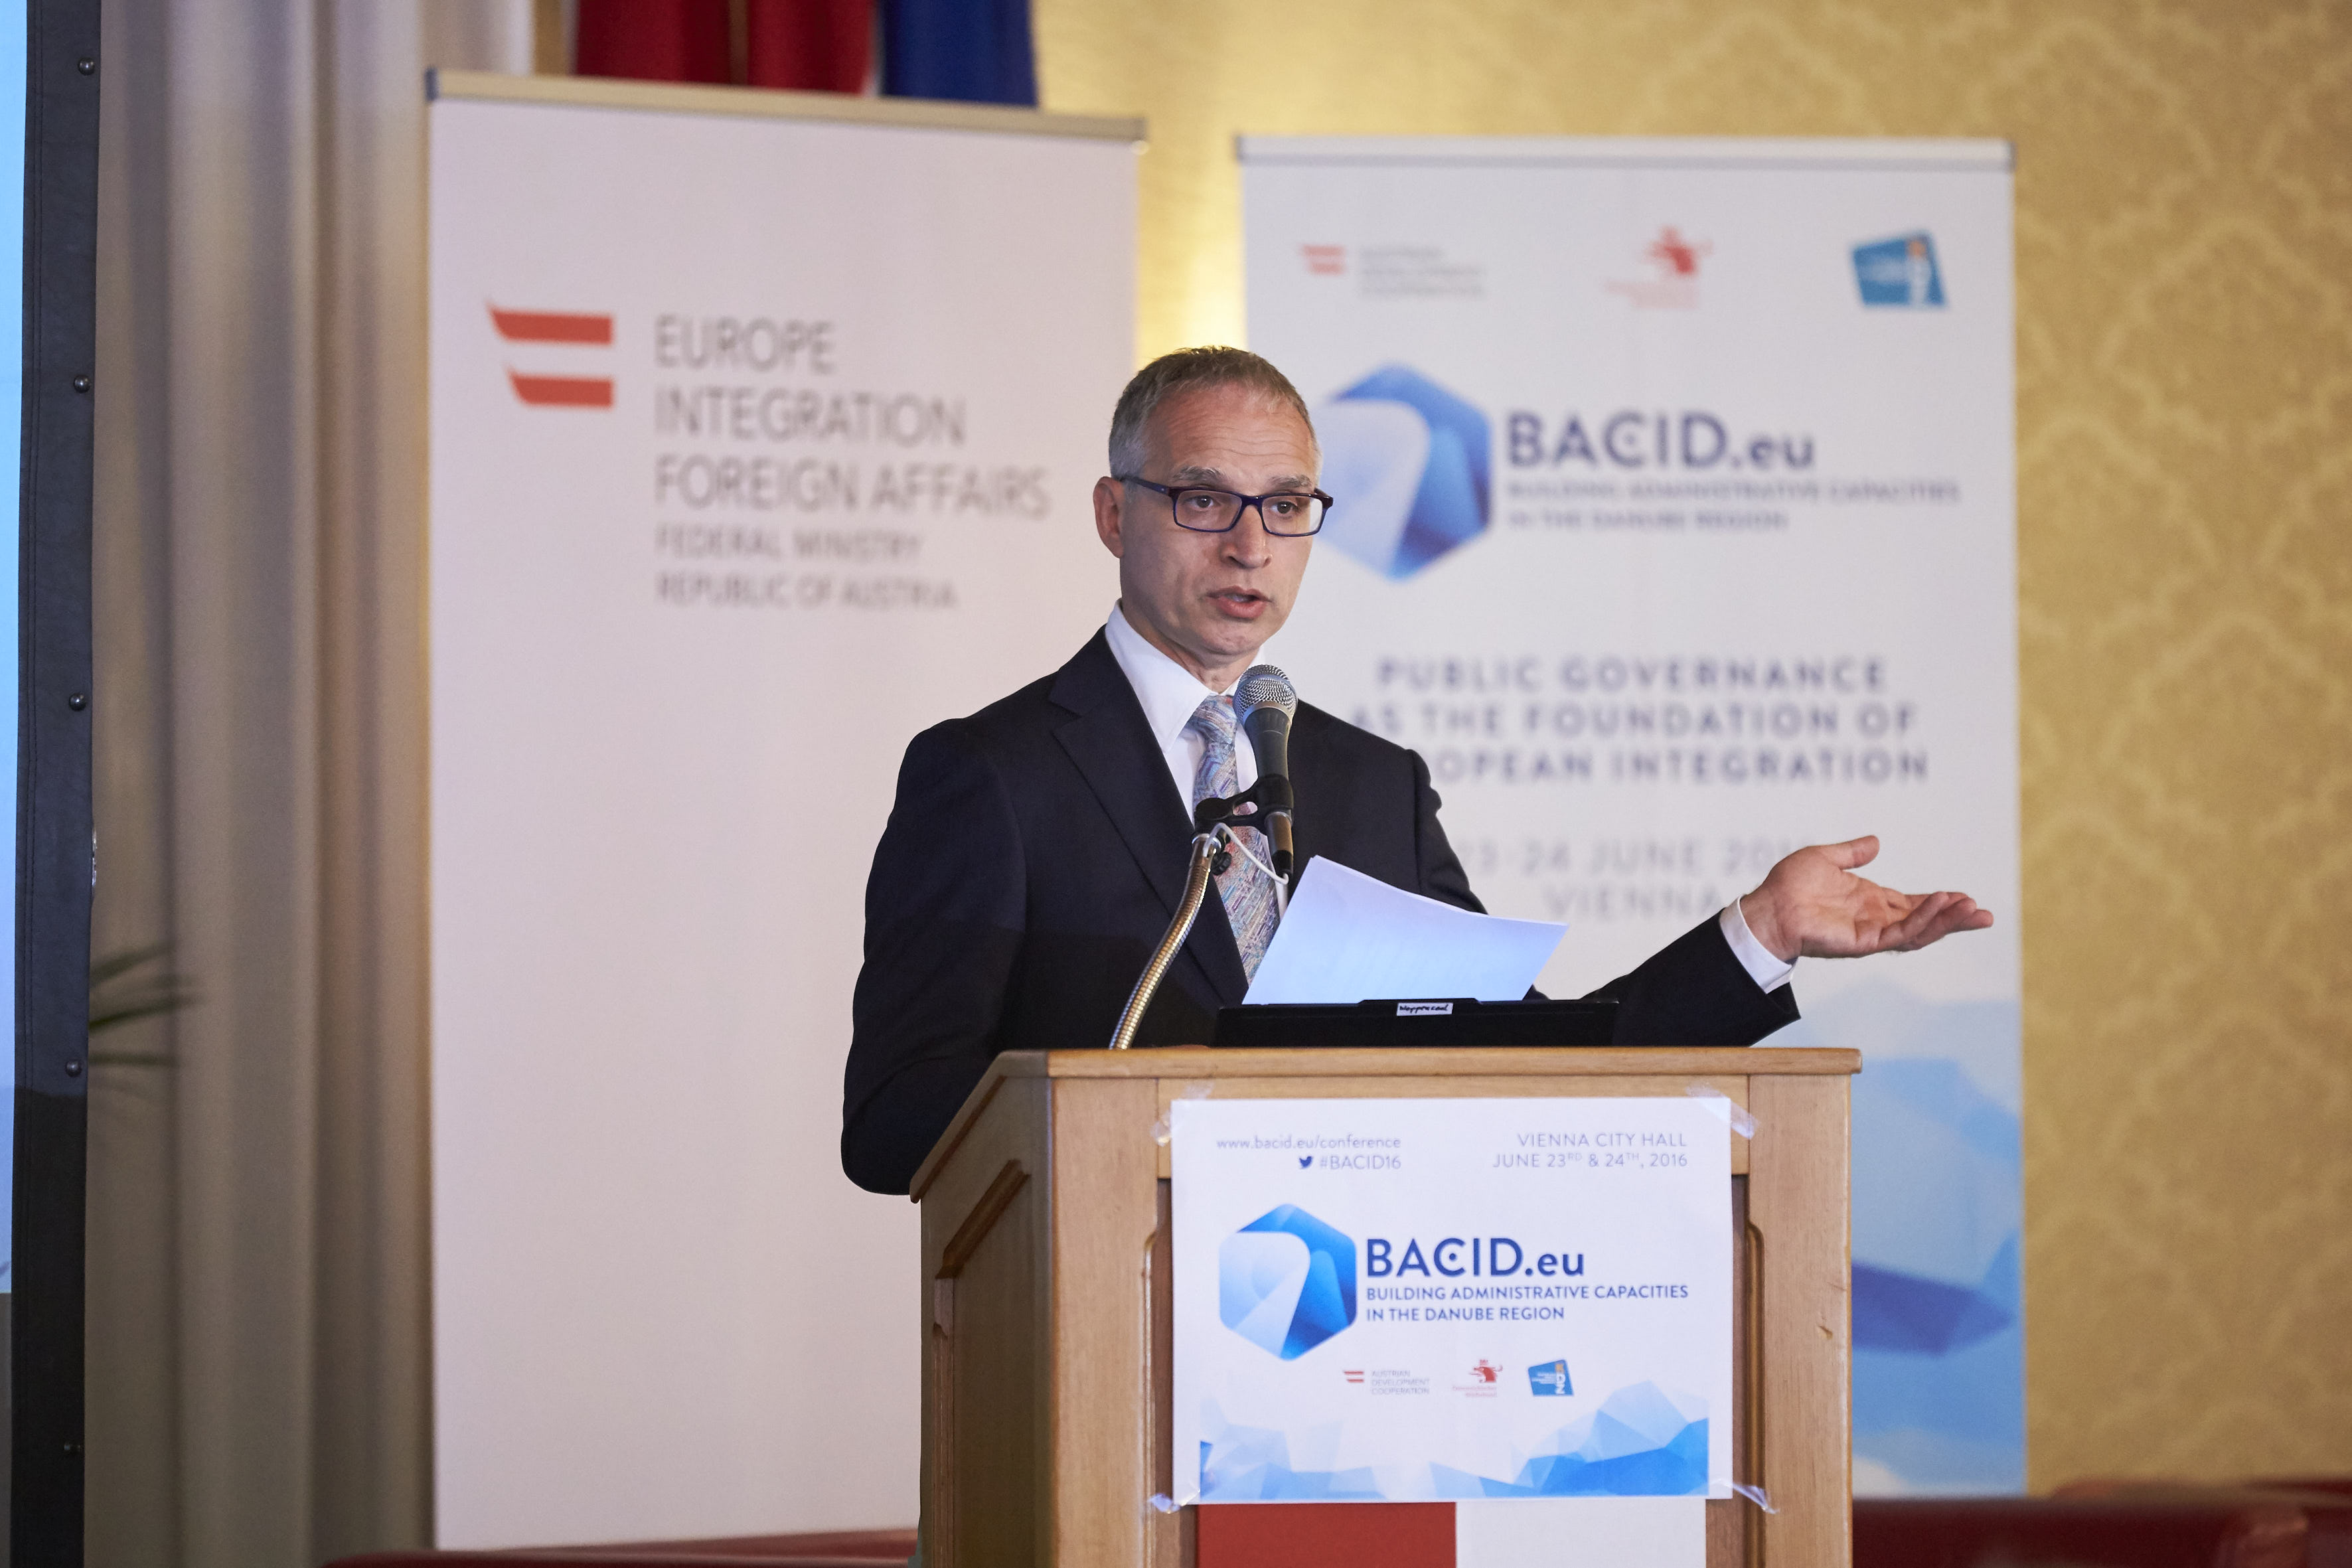 RCC Secretary General, Goran Svilanovic,  speaking at the “Public Governance as the Foundation of European Integration” conference in Vienna on 23 June 2016. (Photo: KDZ Austria)